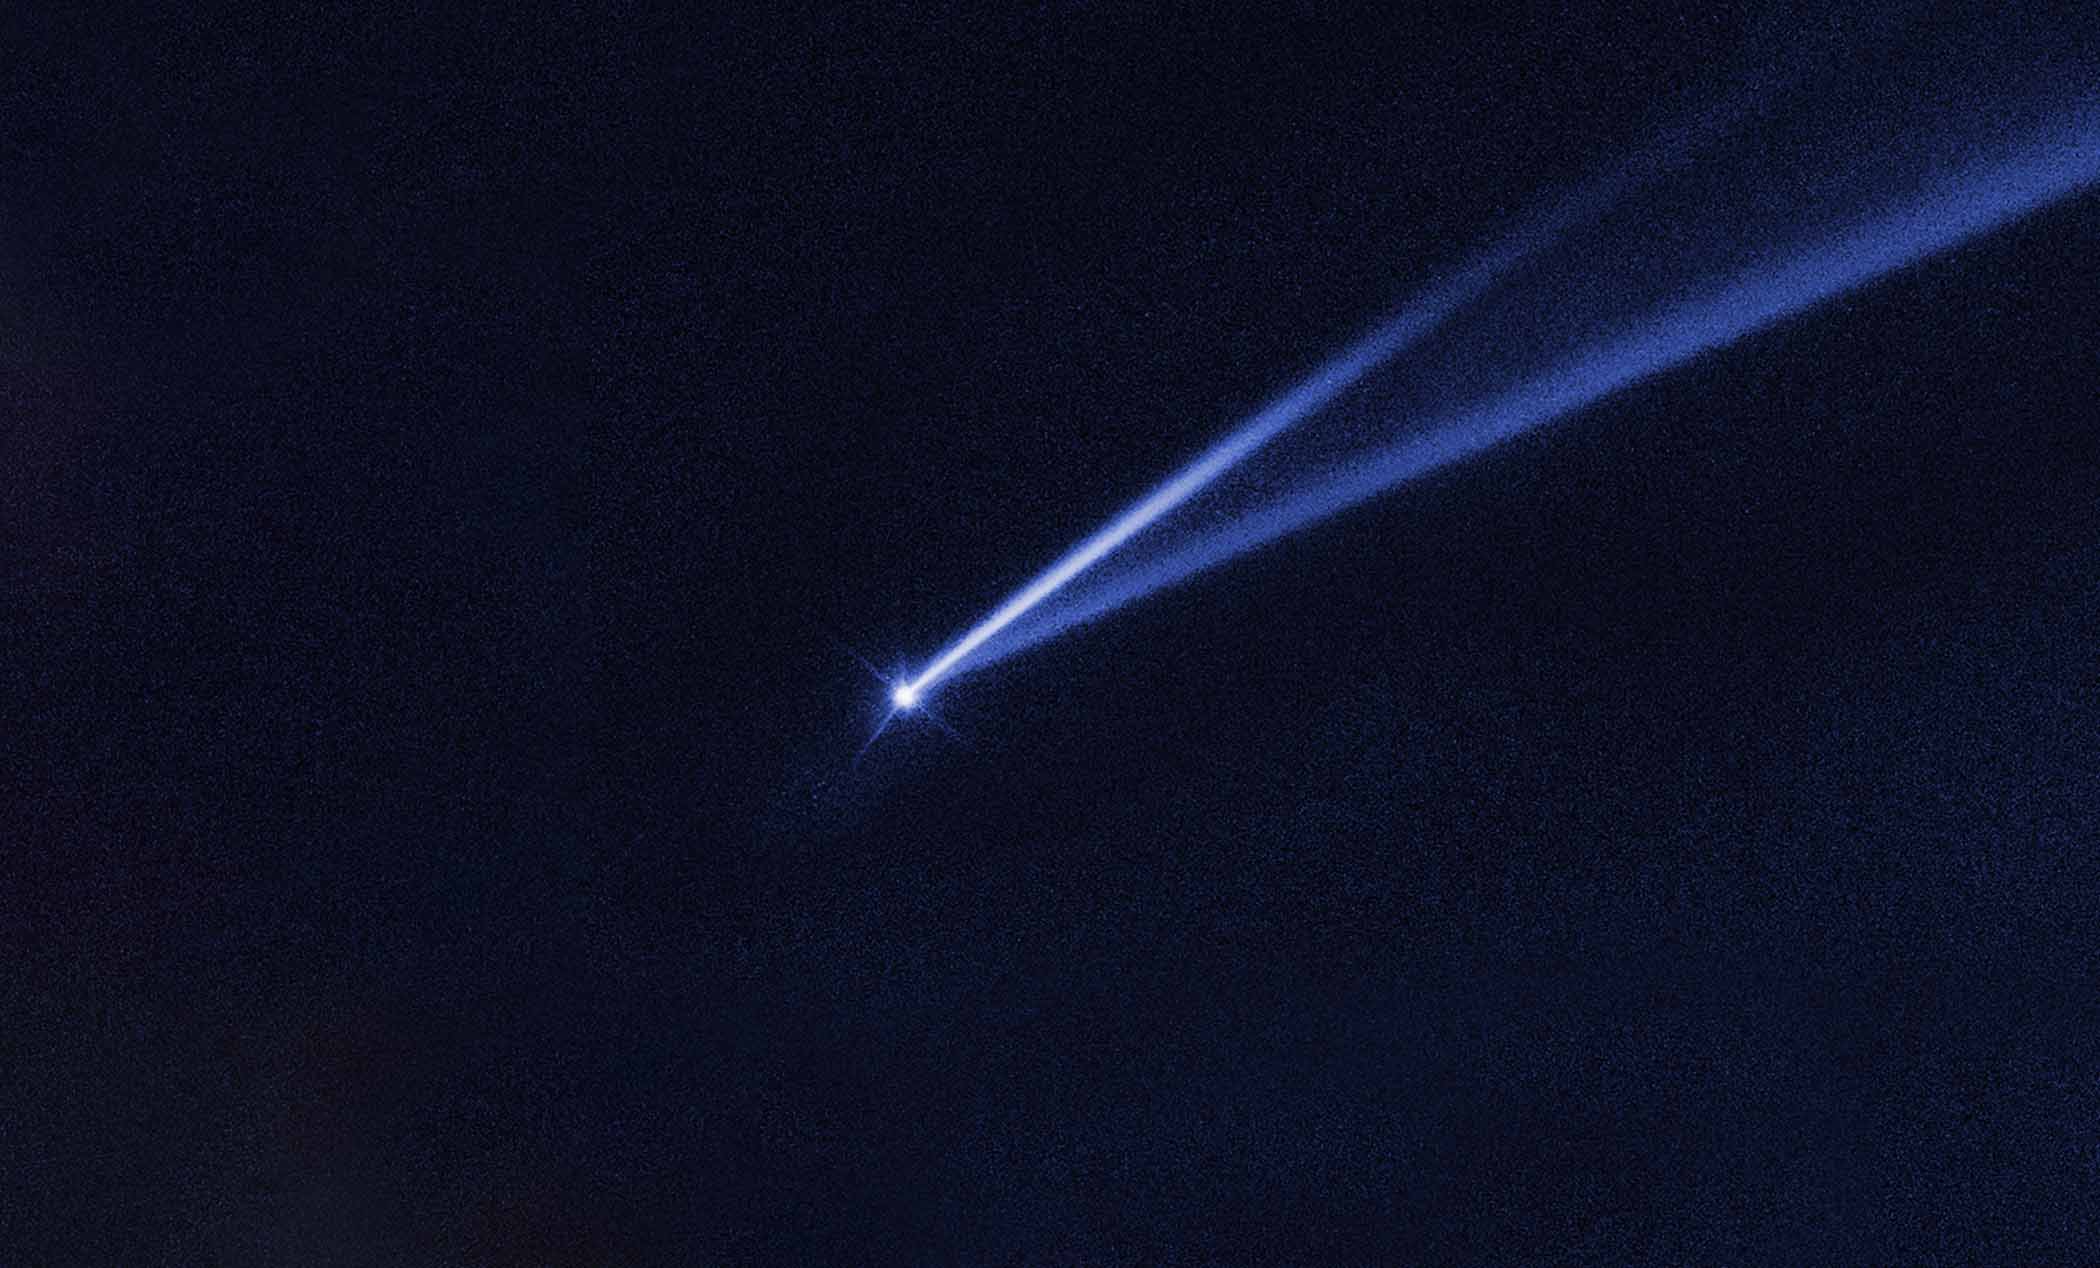 Комета Леонард химтрейлы